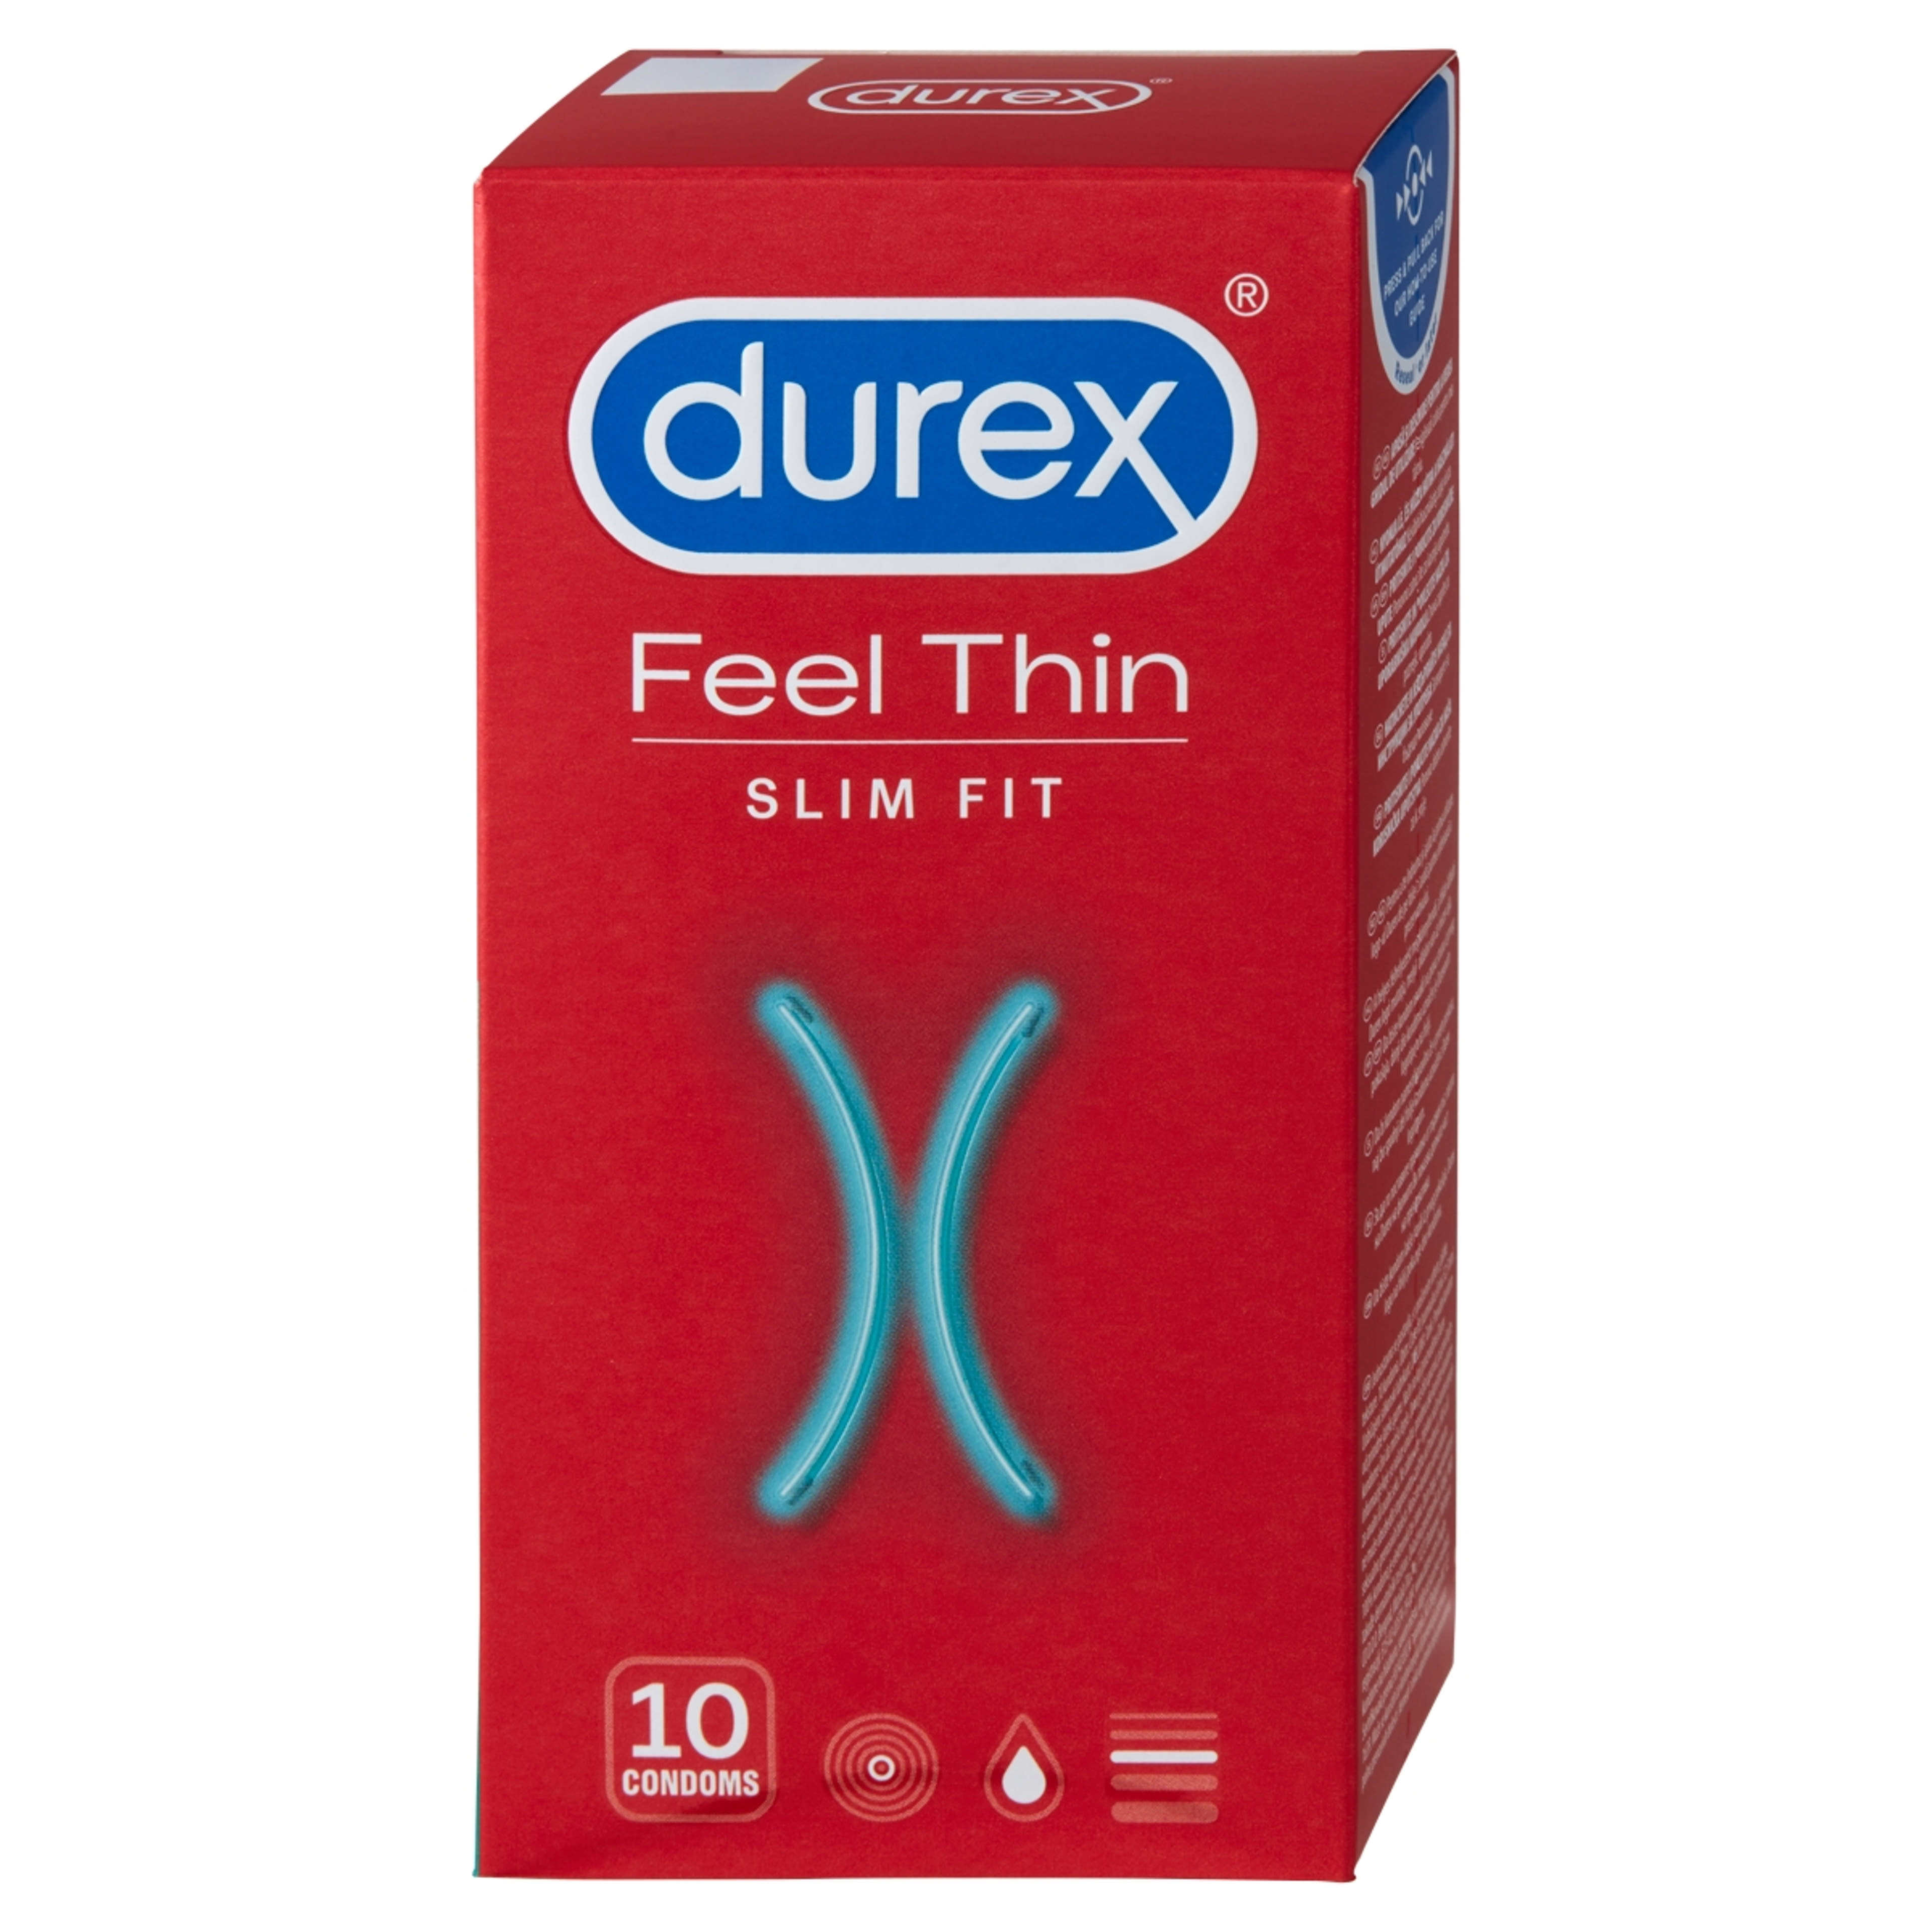 Durex óvszer feel thin slim fit - 10 db-5